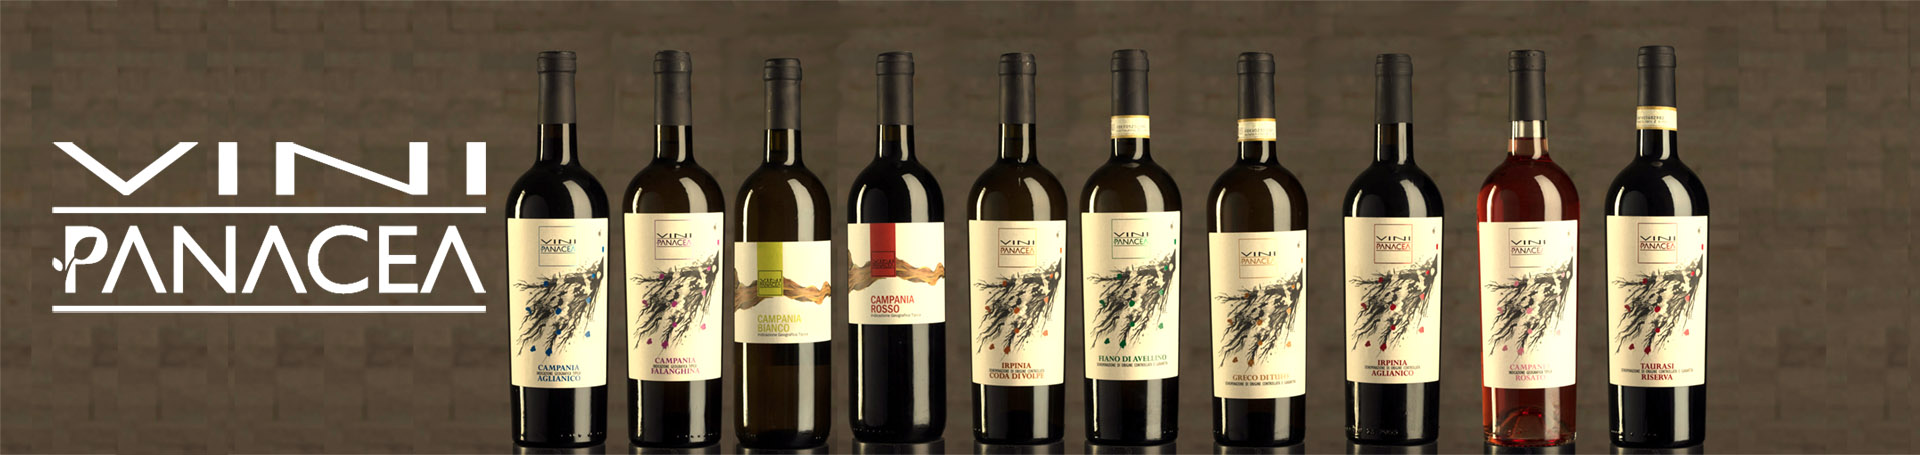 Vini Panacea bottles